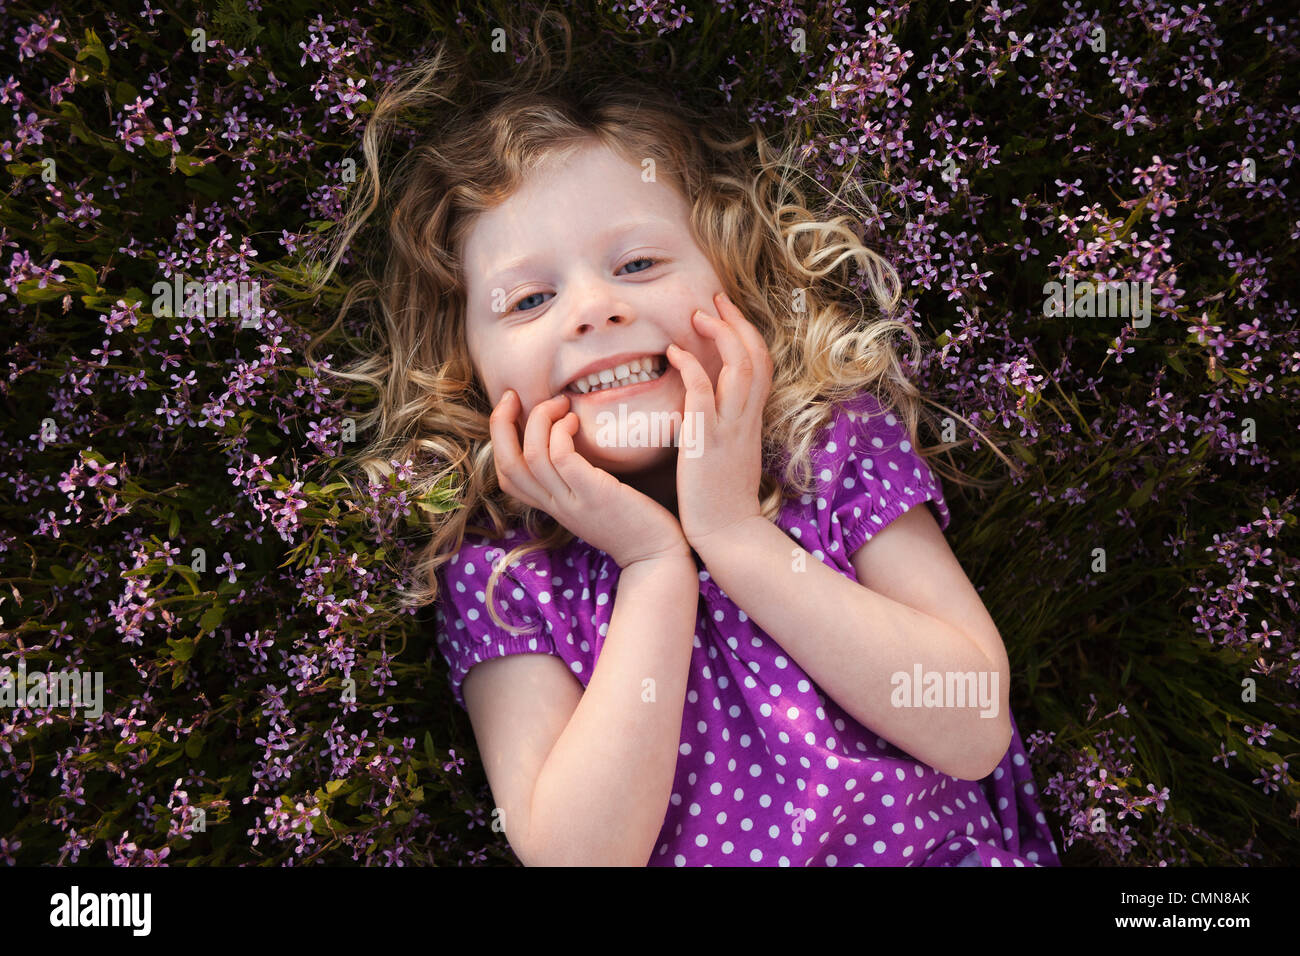 Caucasian girl laying in flowers Stock Photo